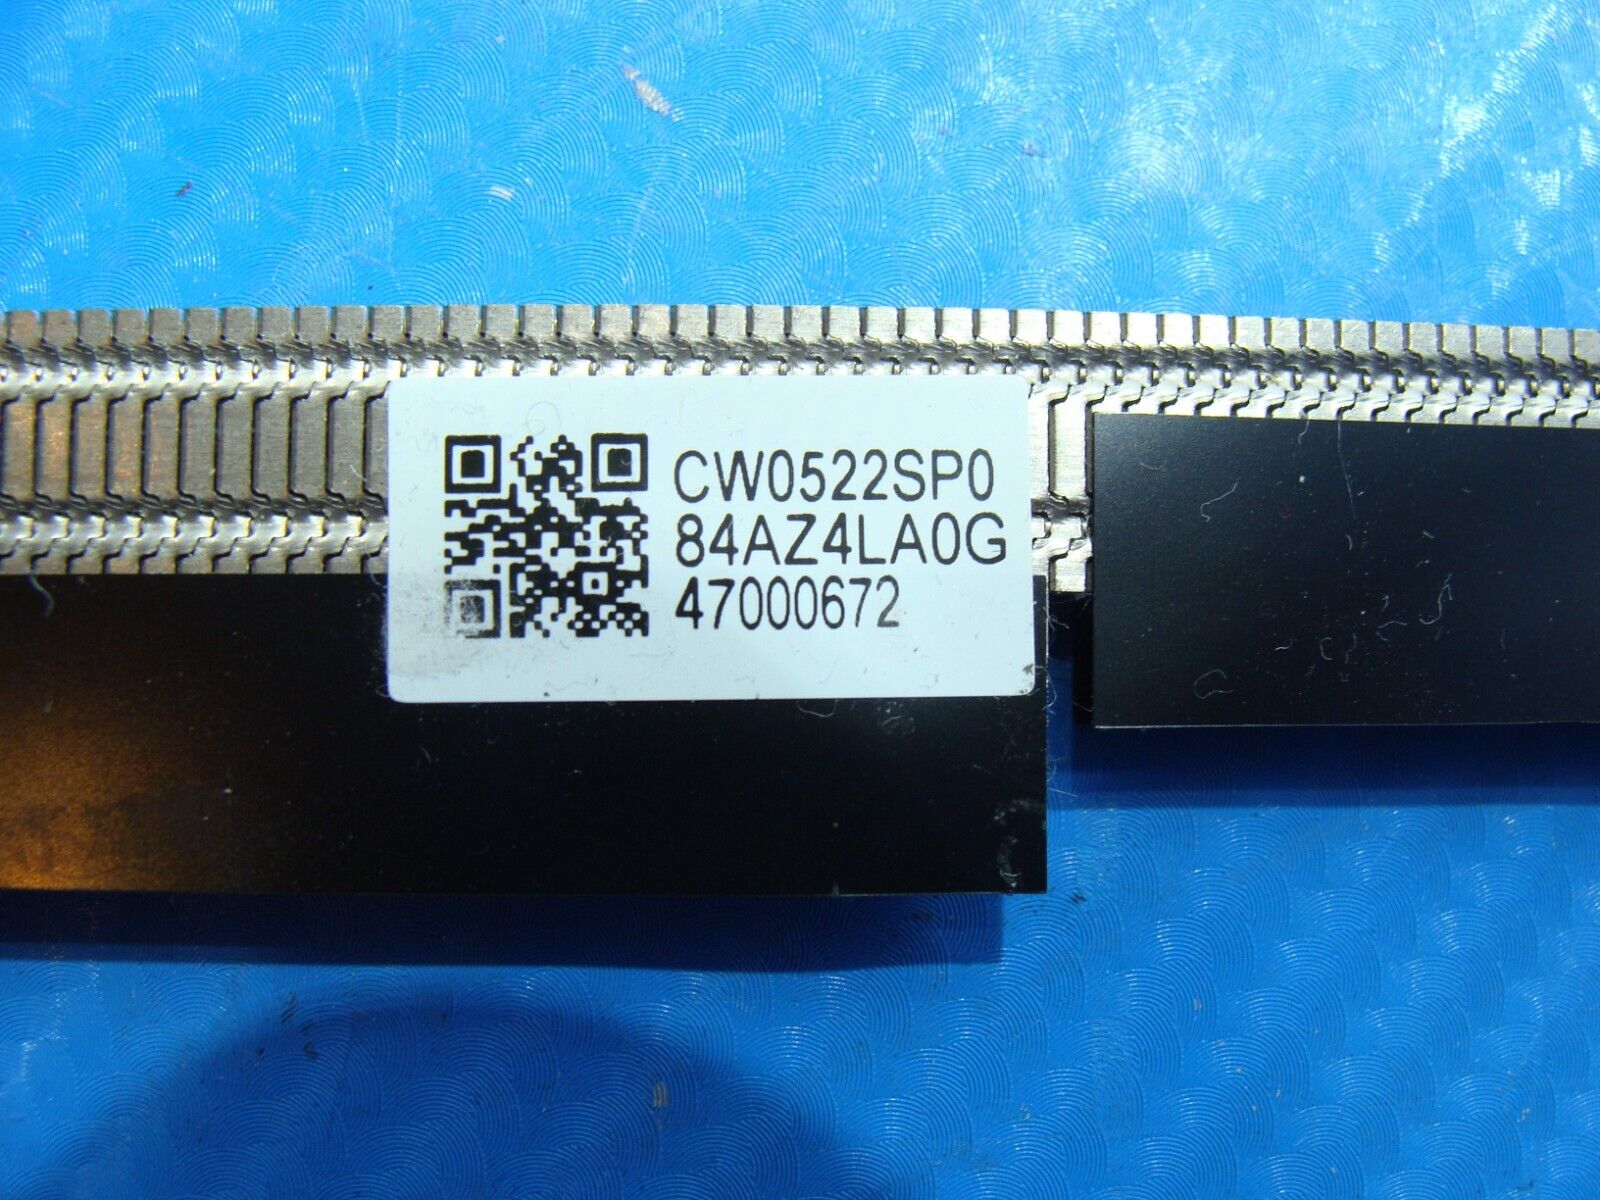 Razer Blade Stealth 13.3” RZ09-0196 OEM Laptop CPU Cooling Heatsink CW0522SP0